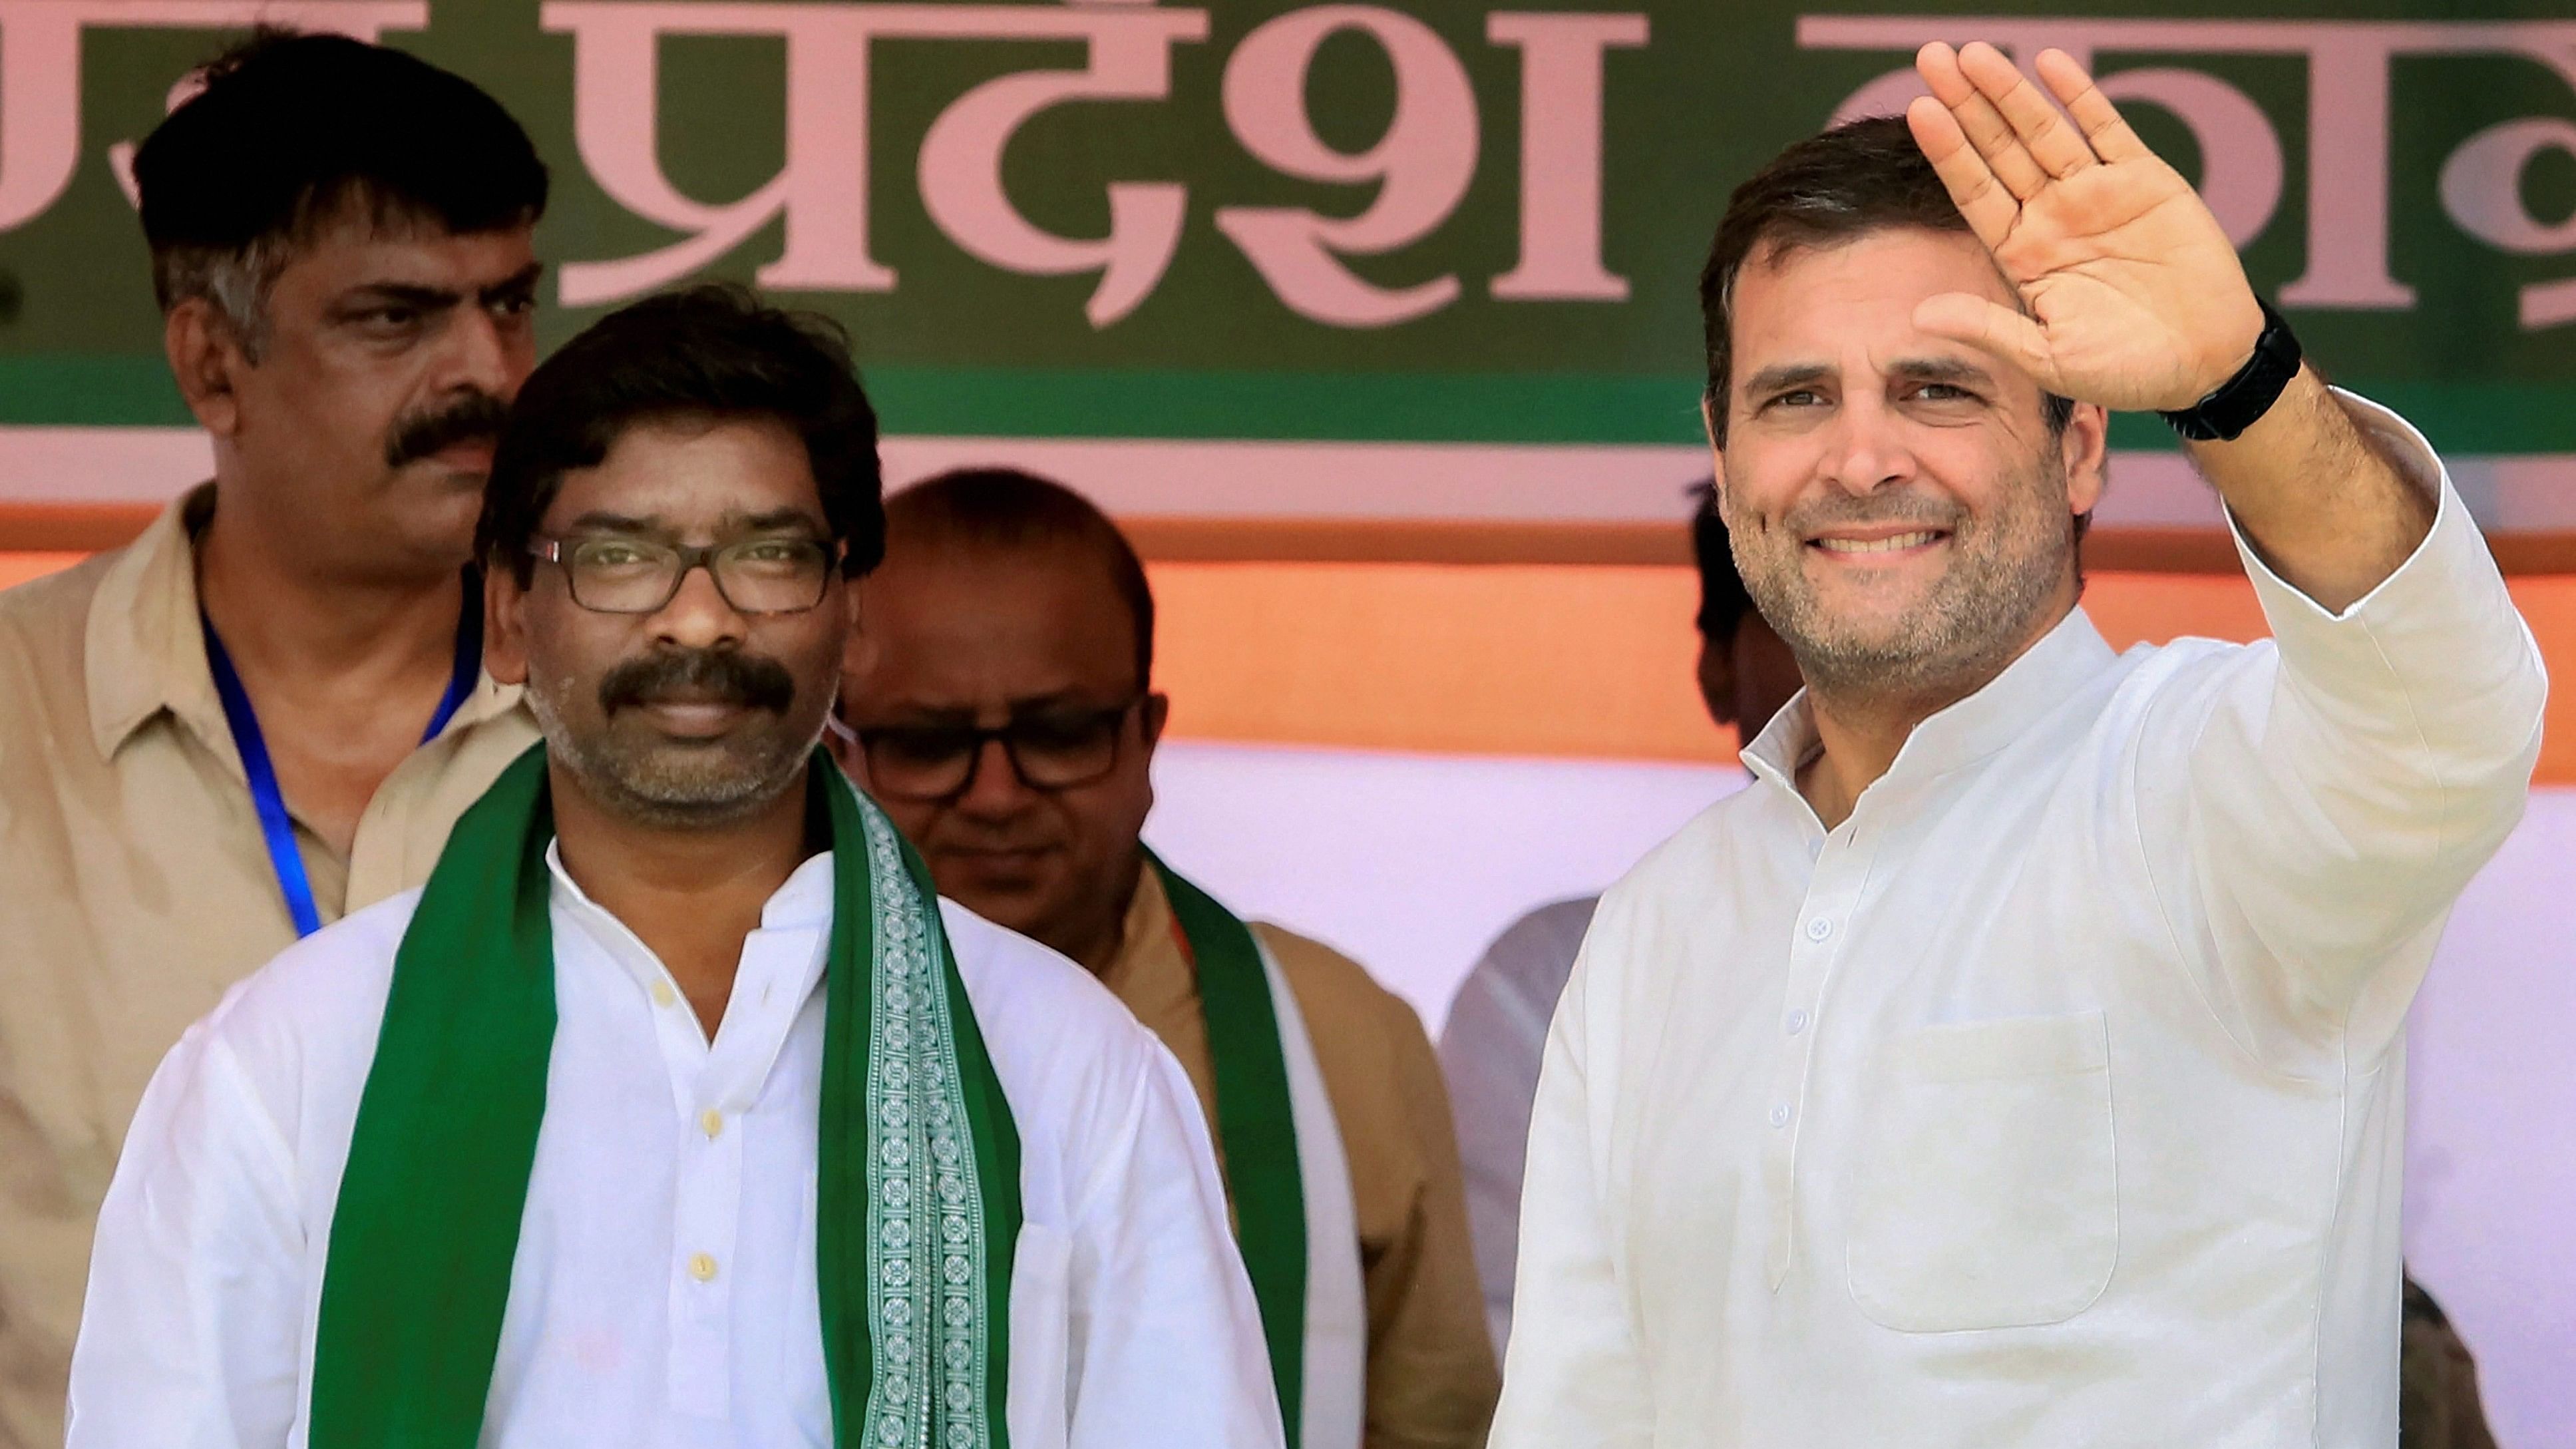 <div class="paragraphs"><p>Congress leader Rahul Gandhi with Jharkhand Mukti Morcha (JMM) leader Hemant Soren</p></div>